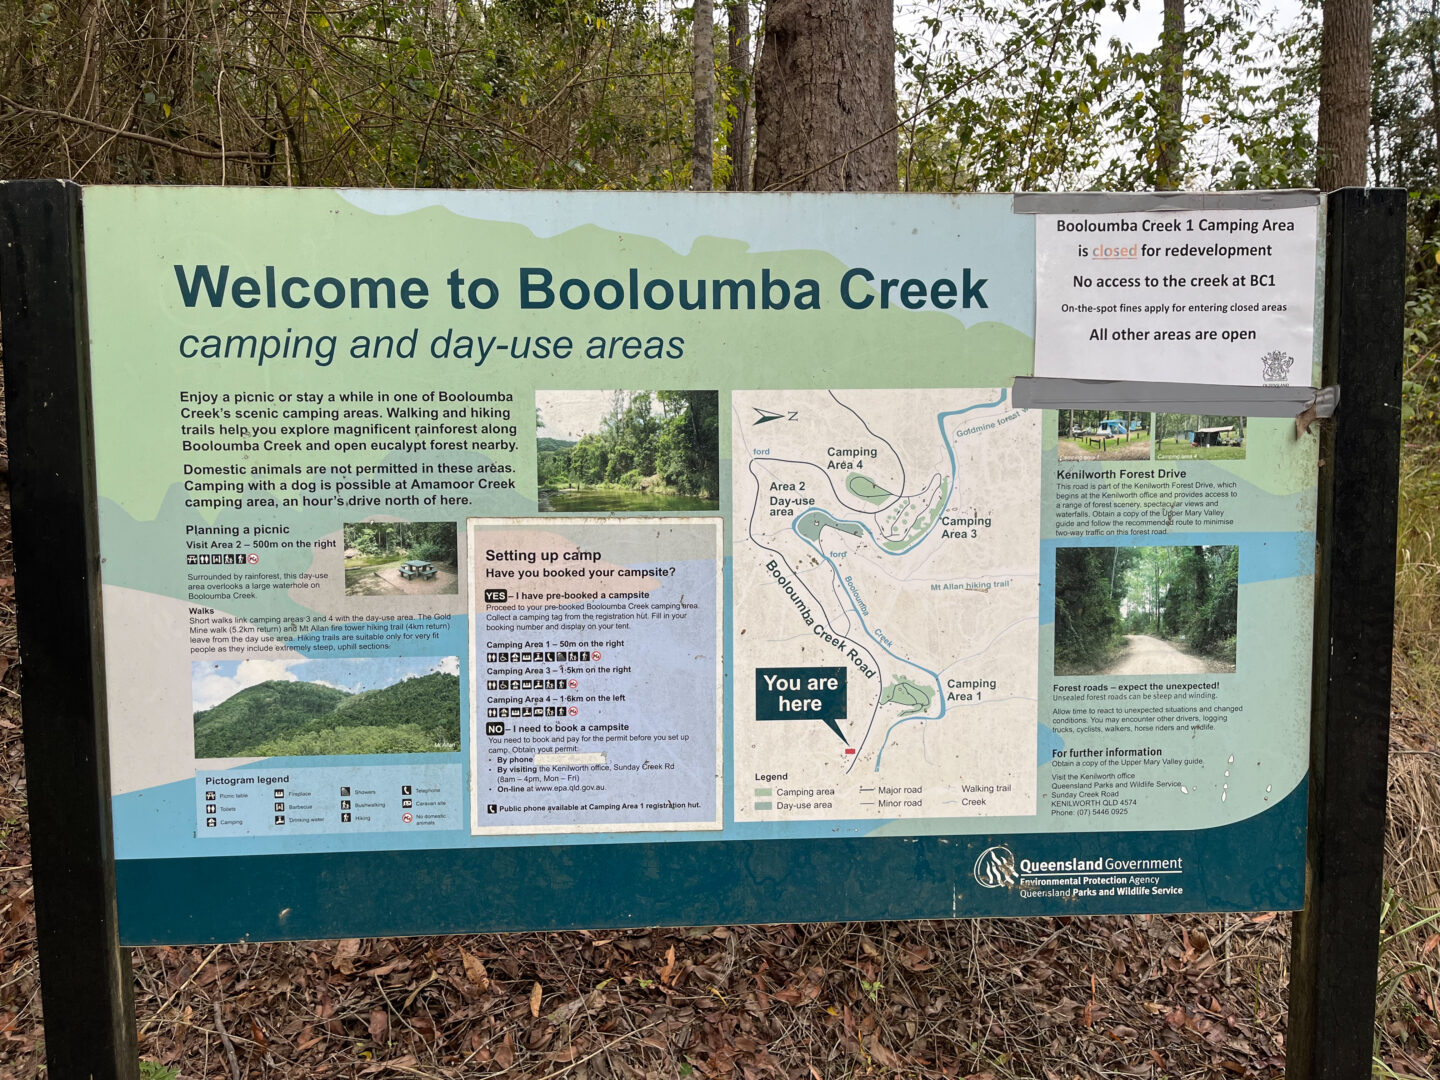 Booloumba Creek Camping